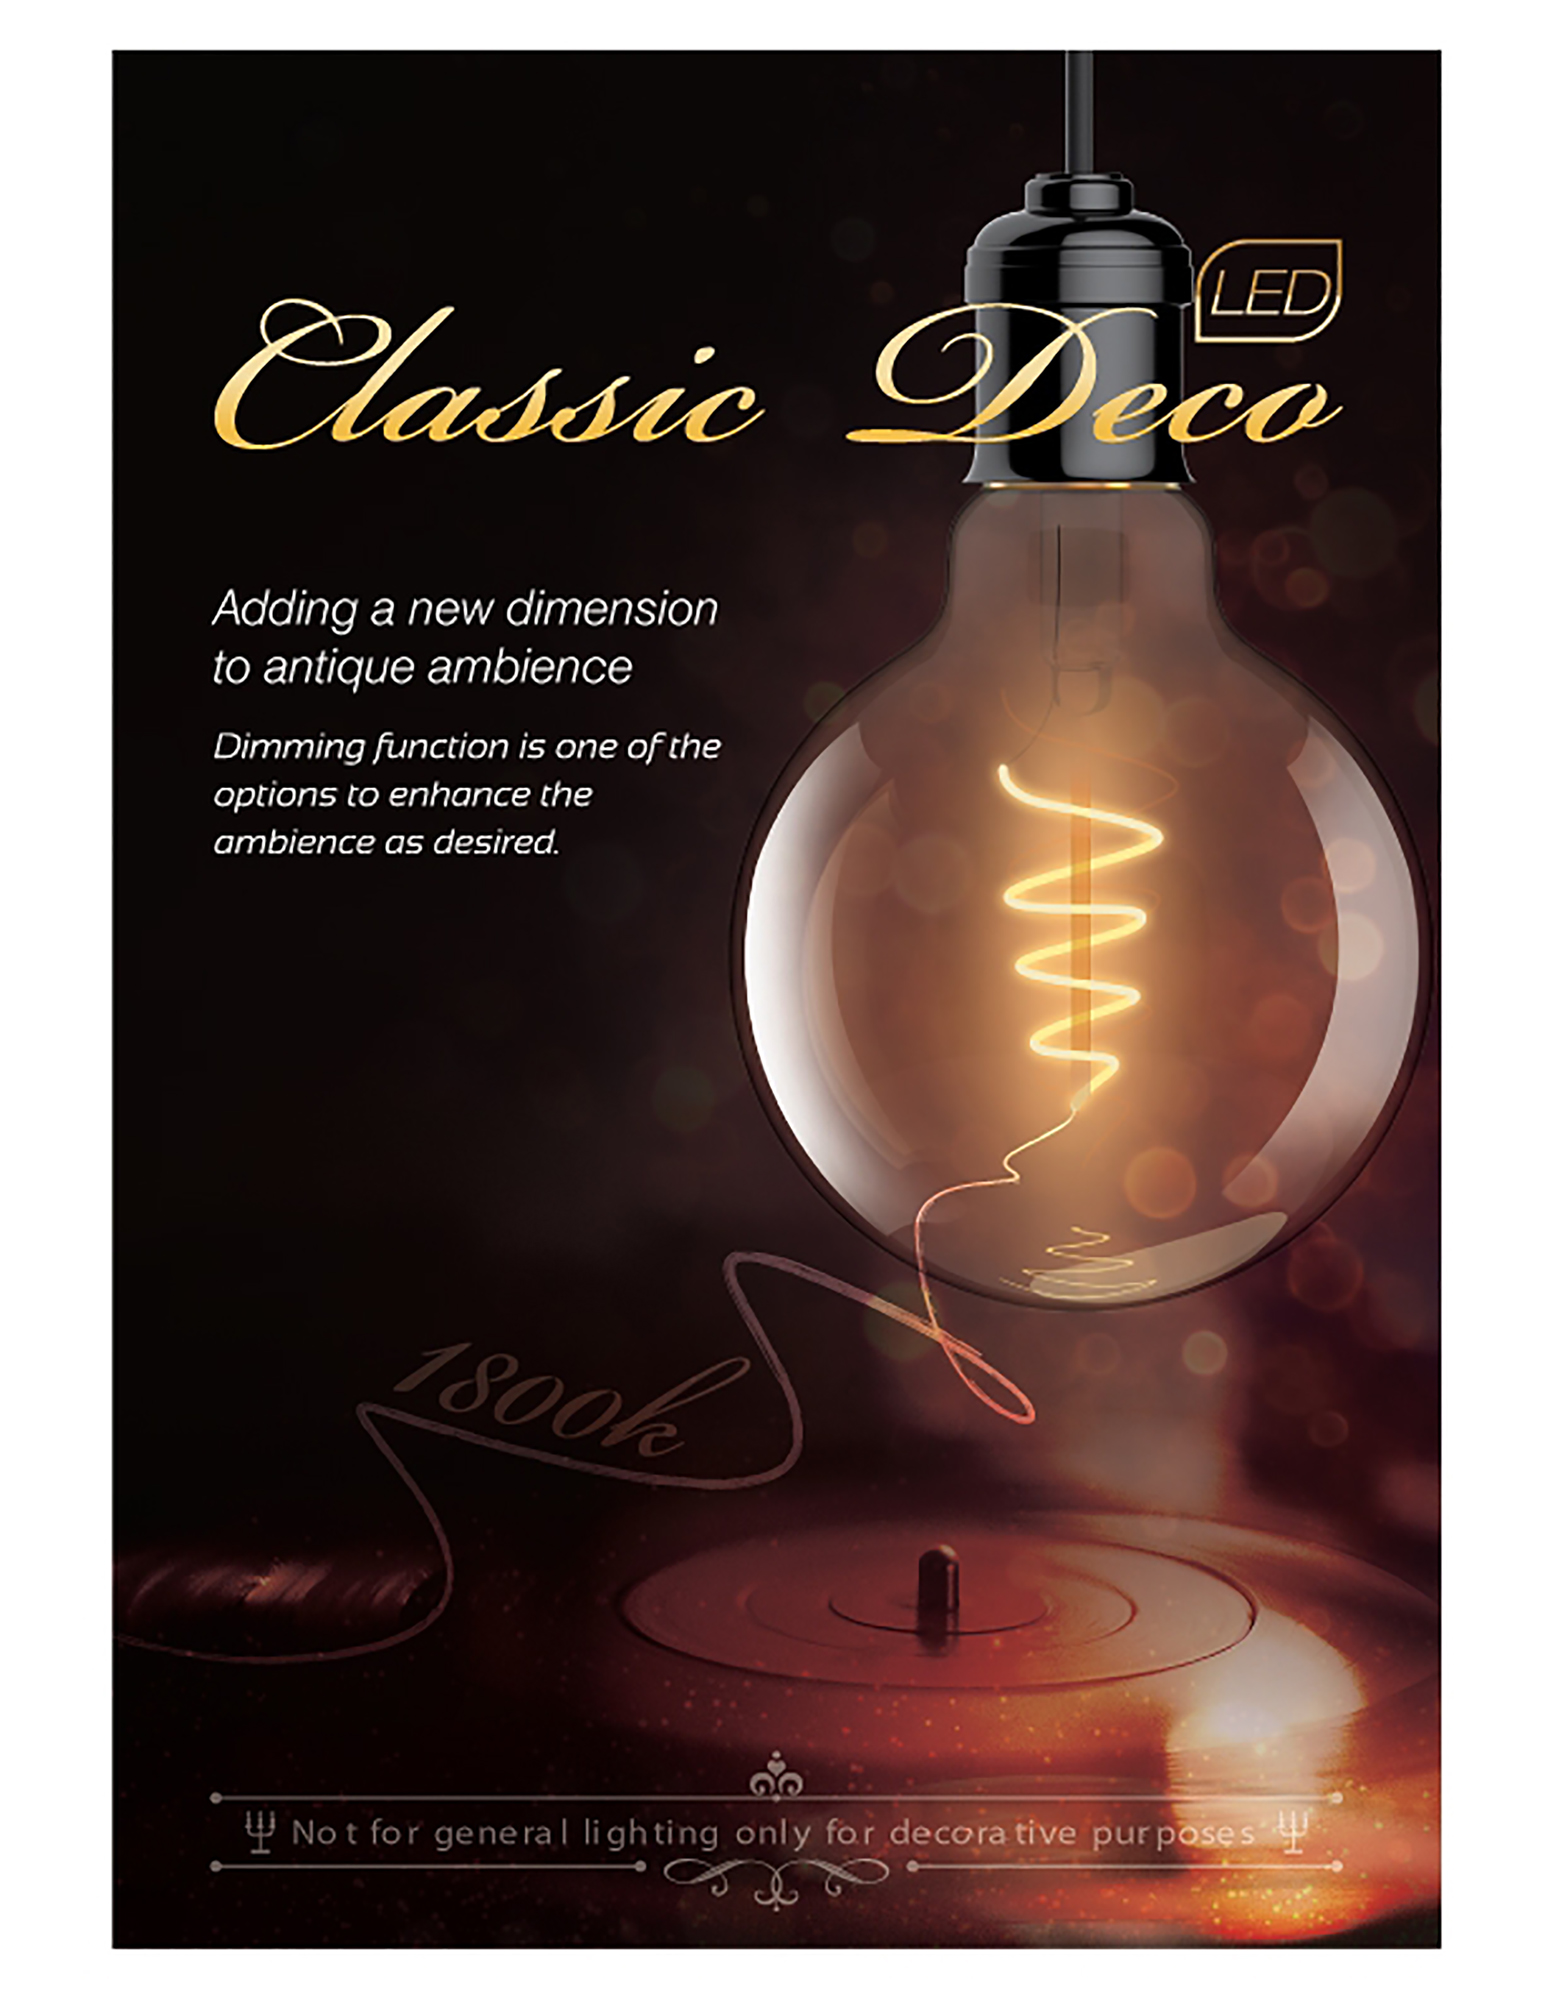 Classic Deco LED Lamps Luxram Golf Ball